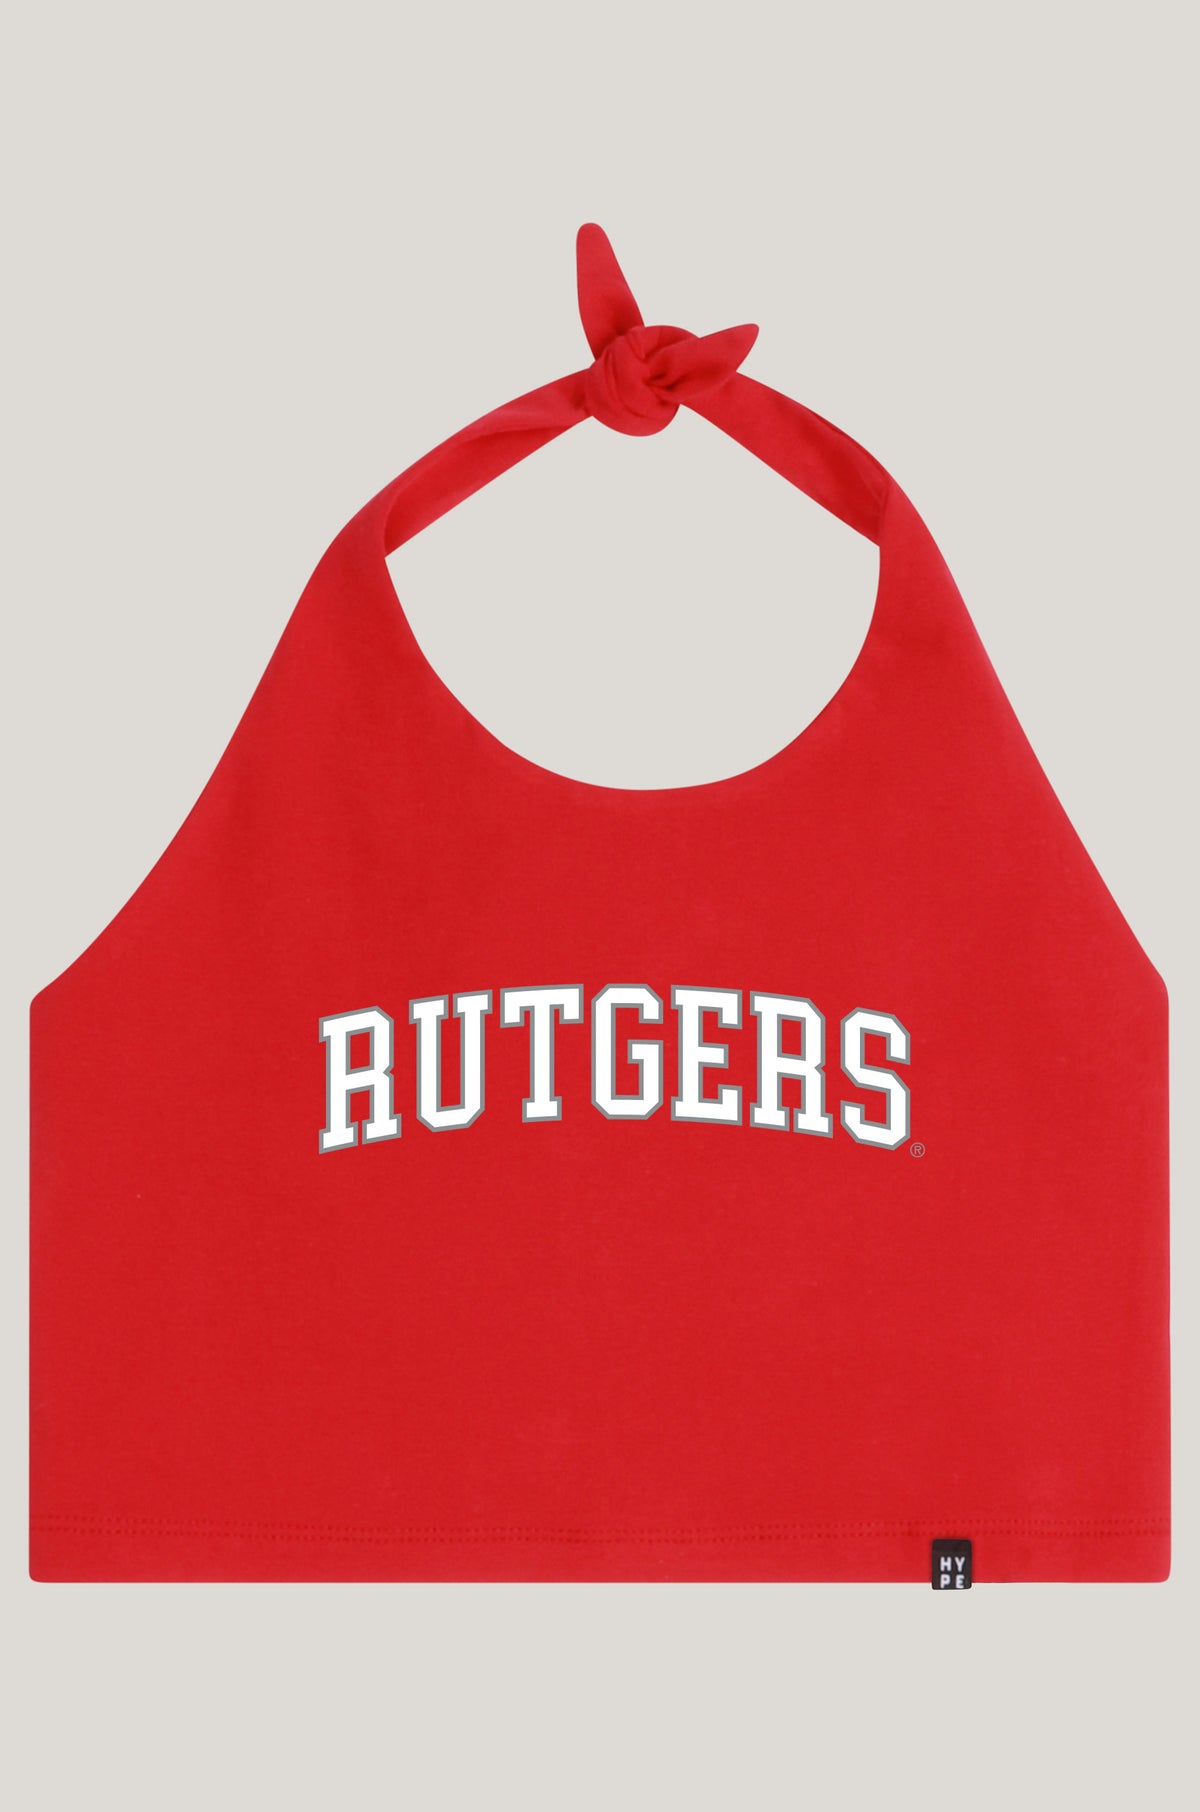 Rutgers Tailgate Top